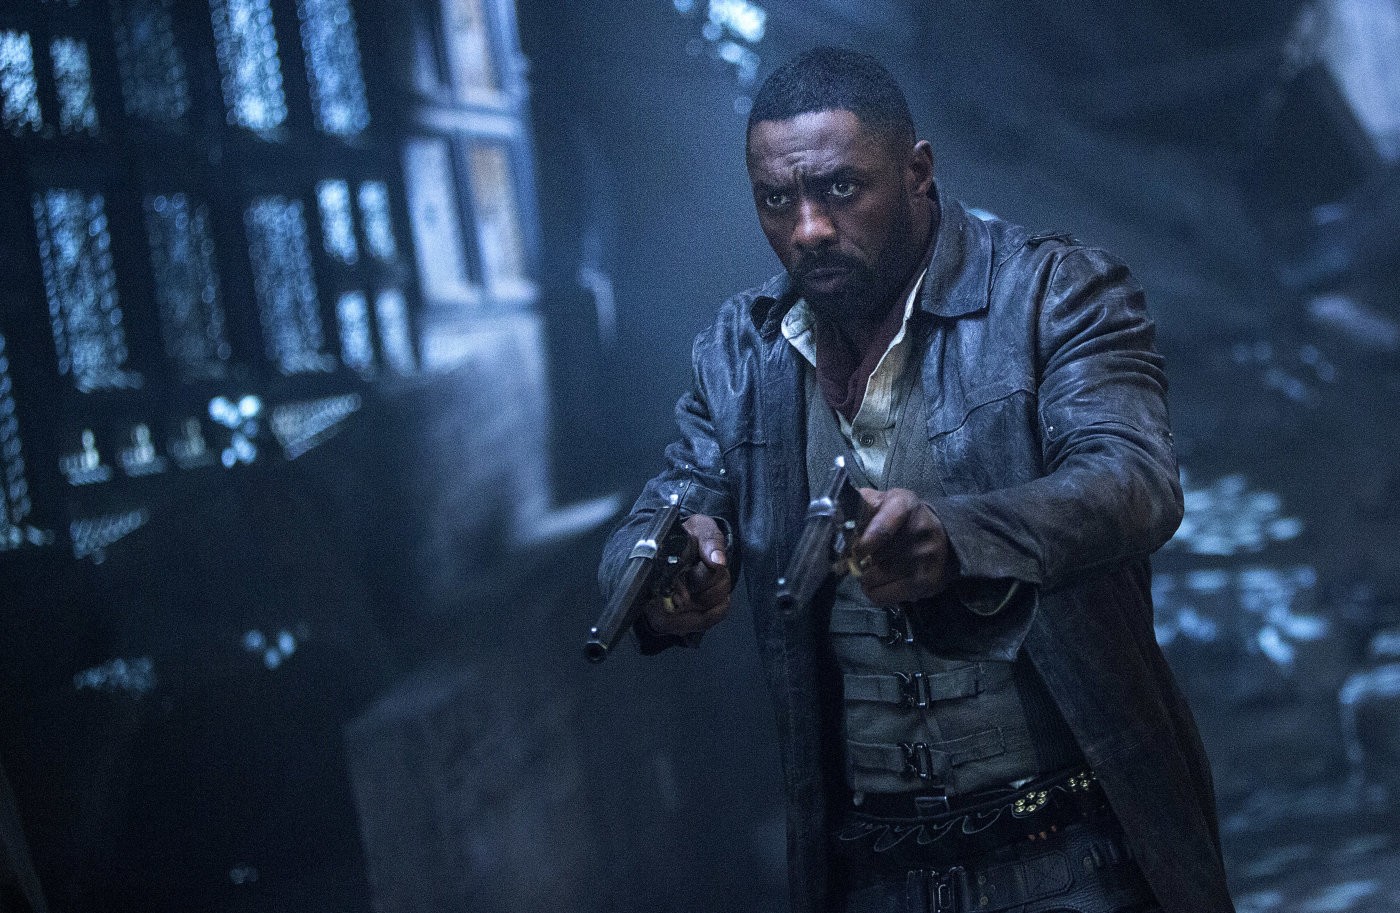 Idris Elba as the Gunslinger in The Dark Tower